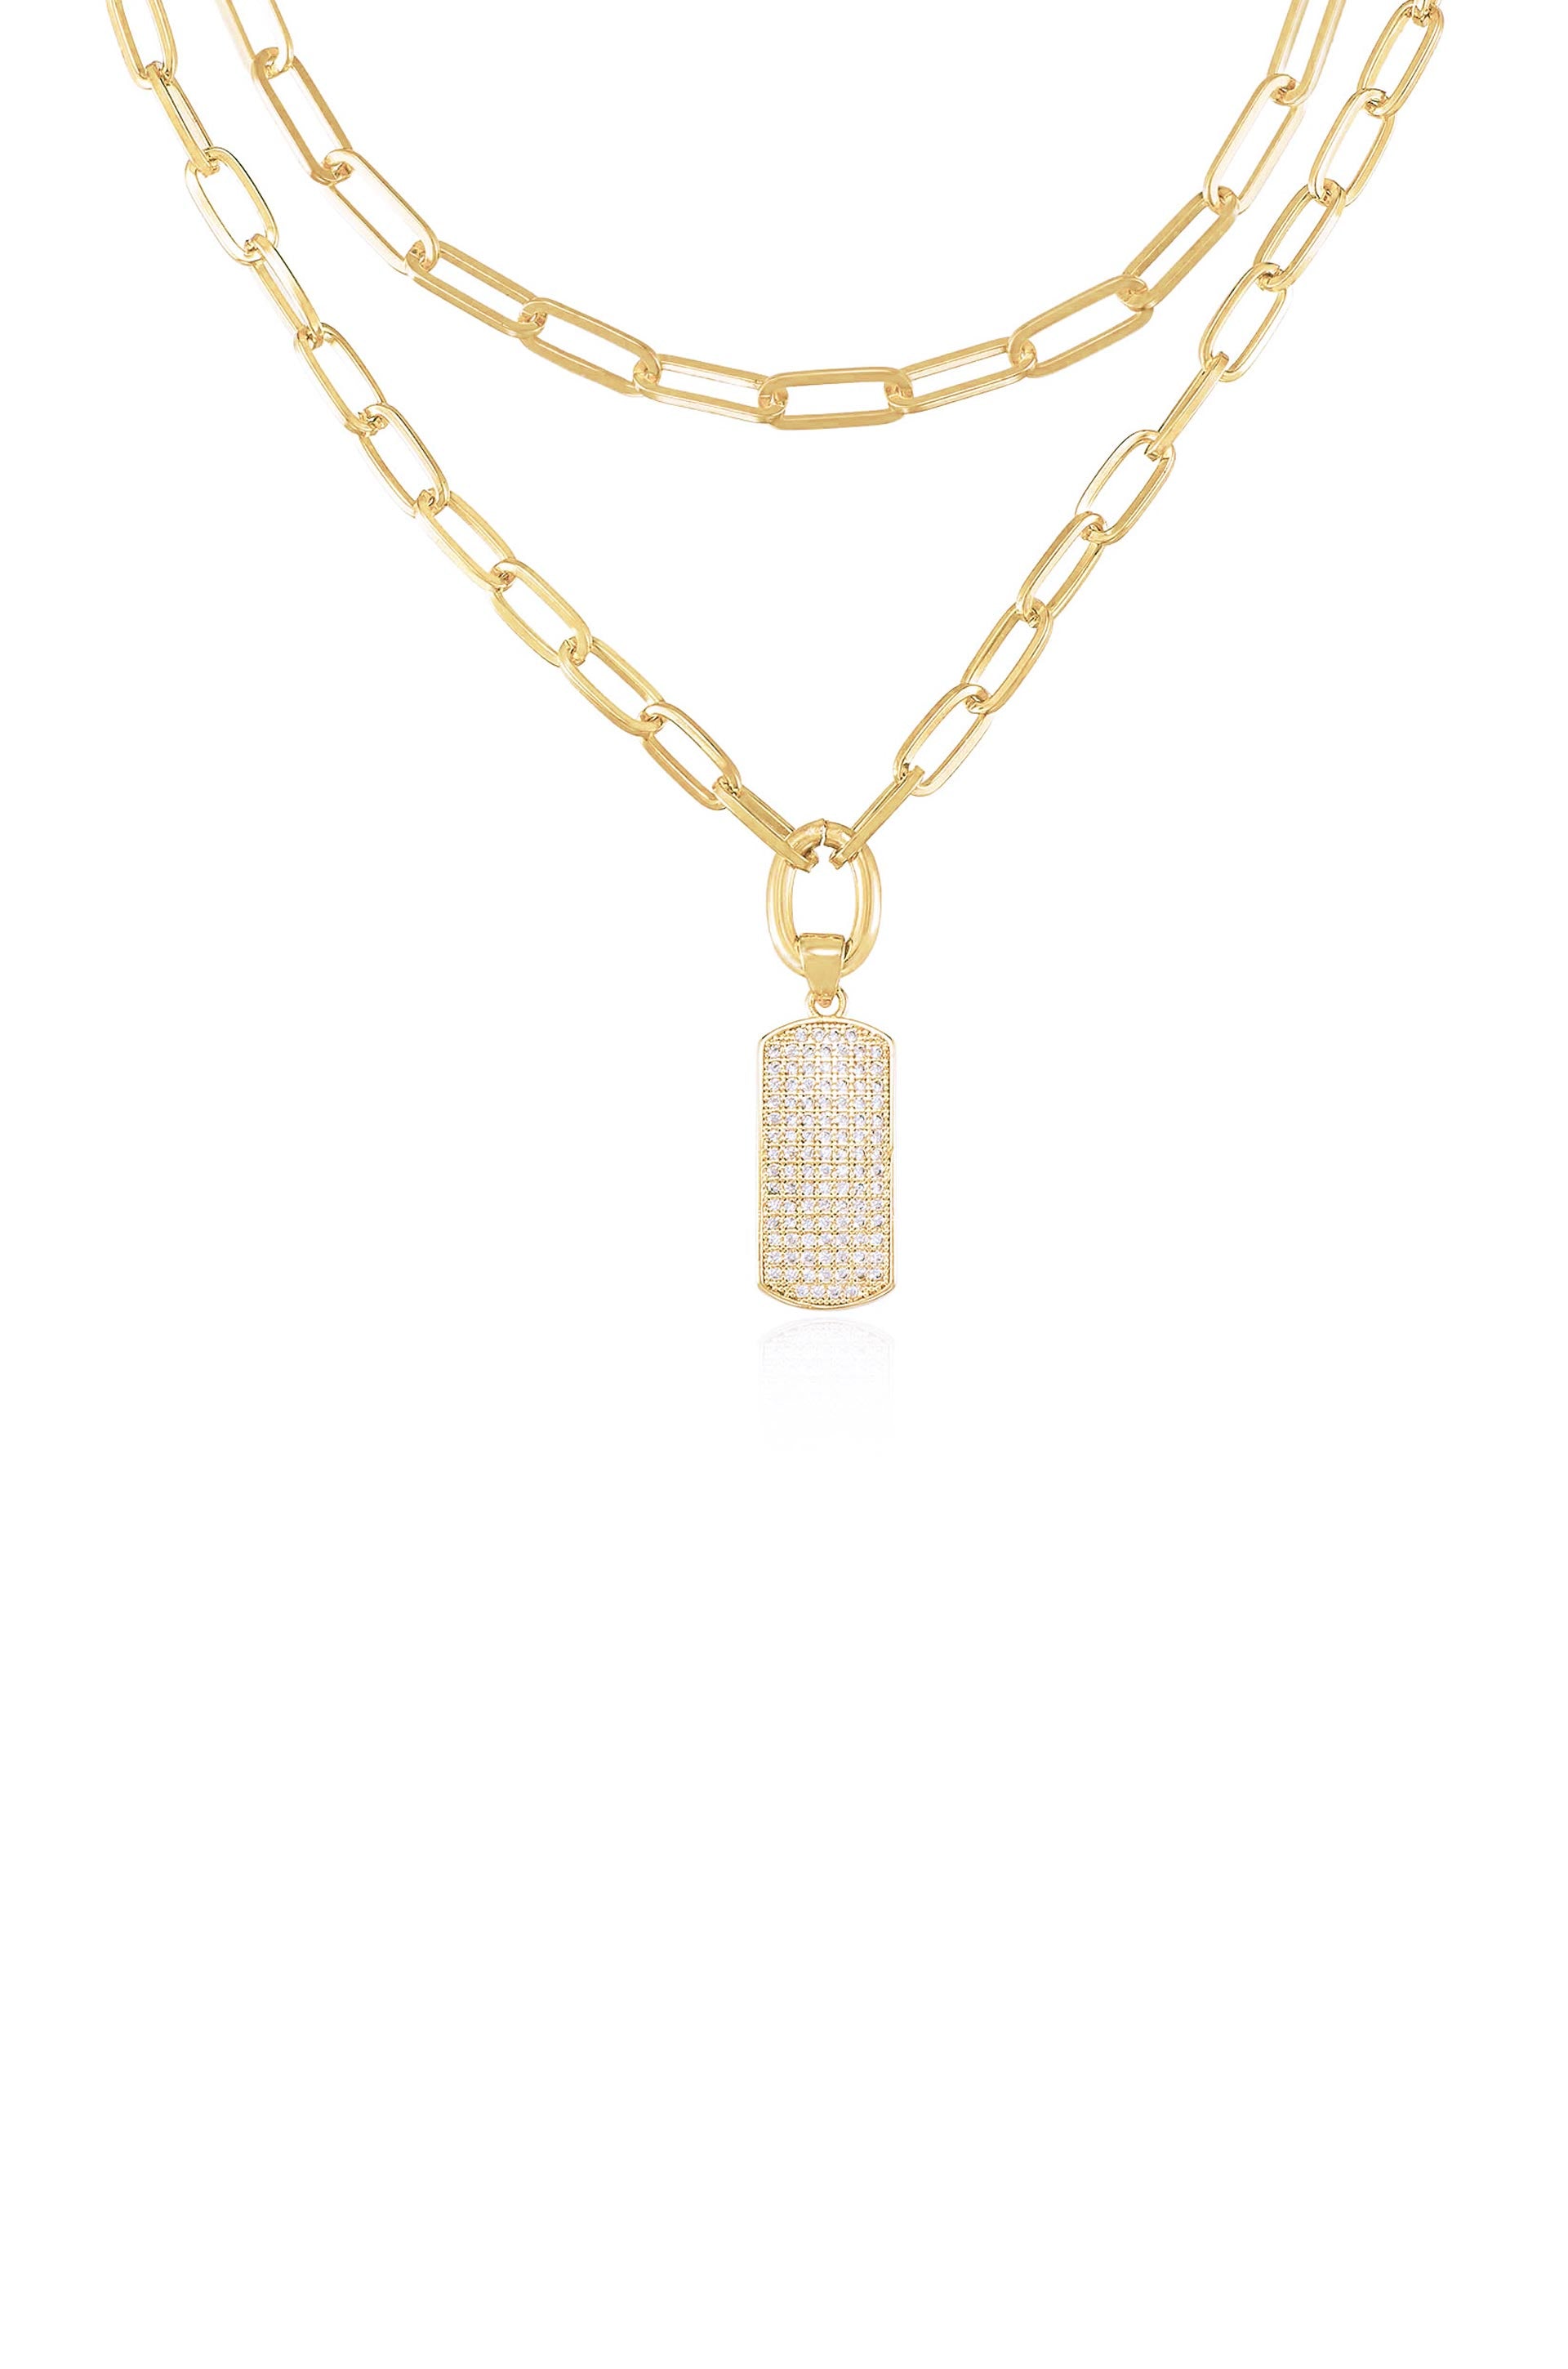 Chain Extender 2 Inch 18K White Gold Necklace 18K White Gold